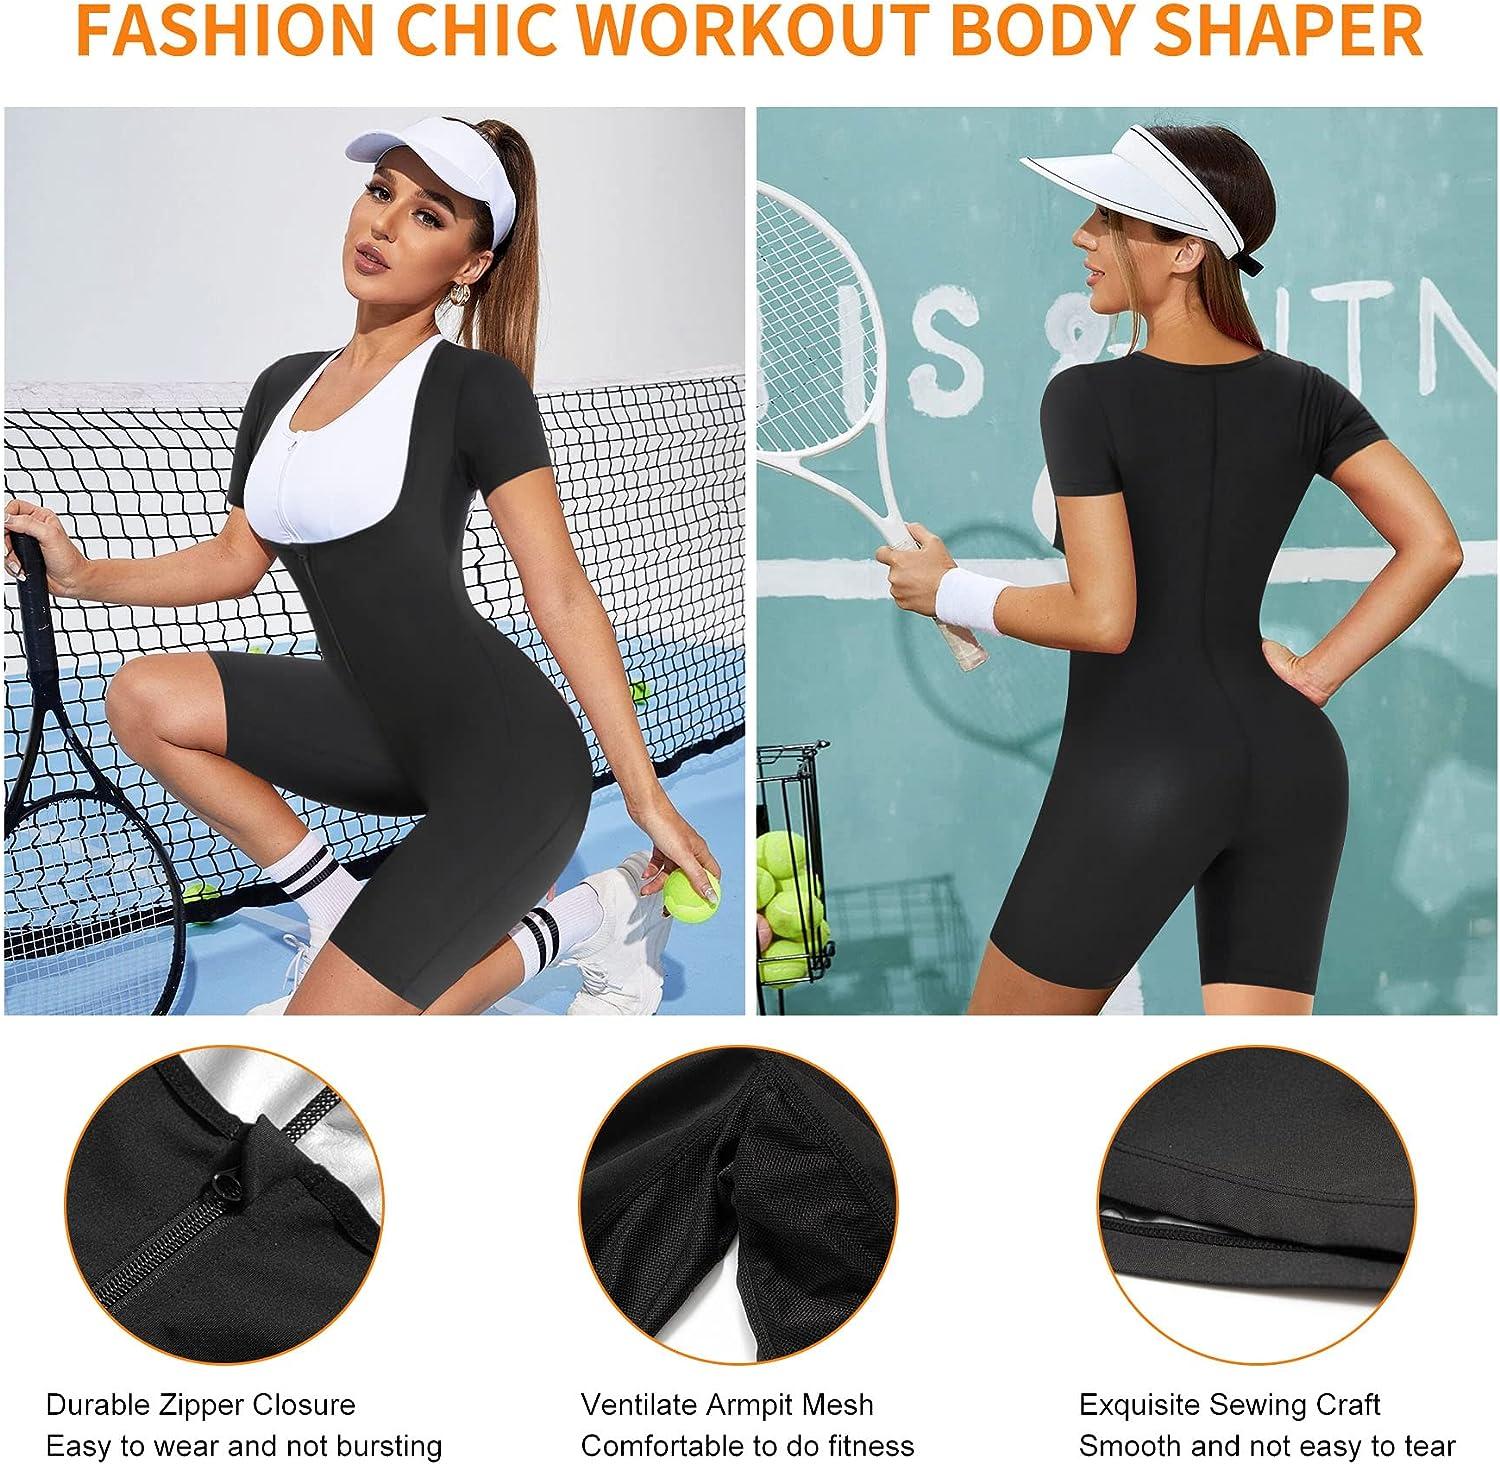 Waist Trainer Women Sauna Sweat Top Vest Body Shaper Slimming Waist Cincher Workout  Shapewear